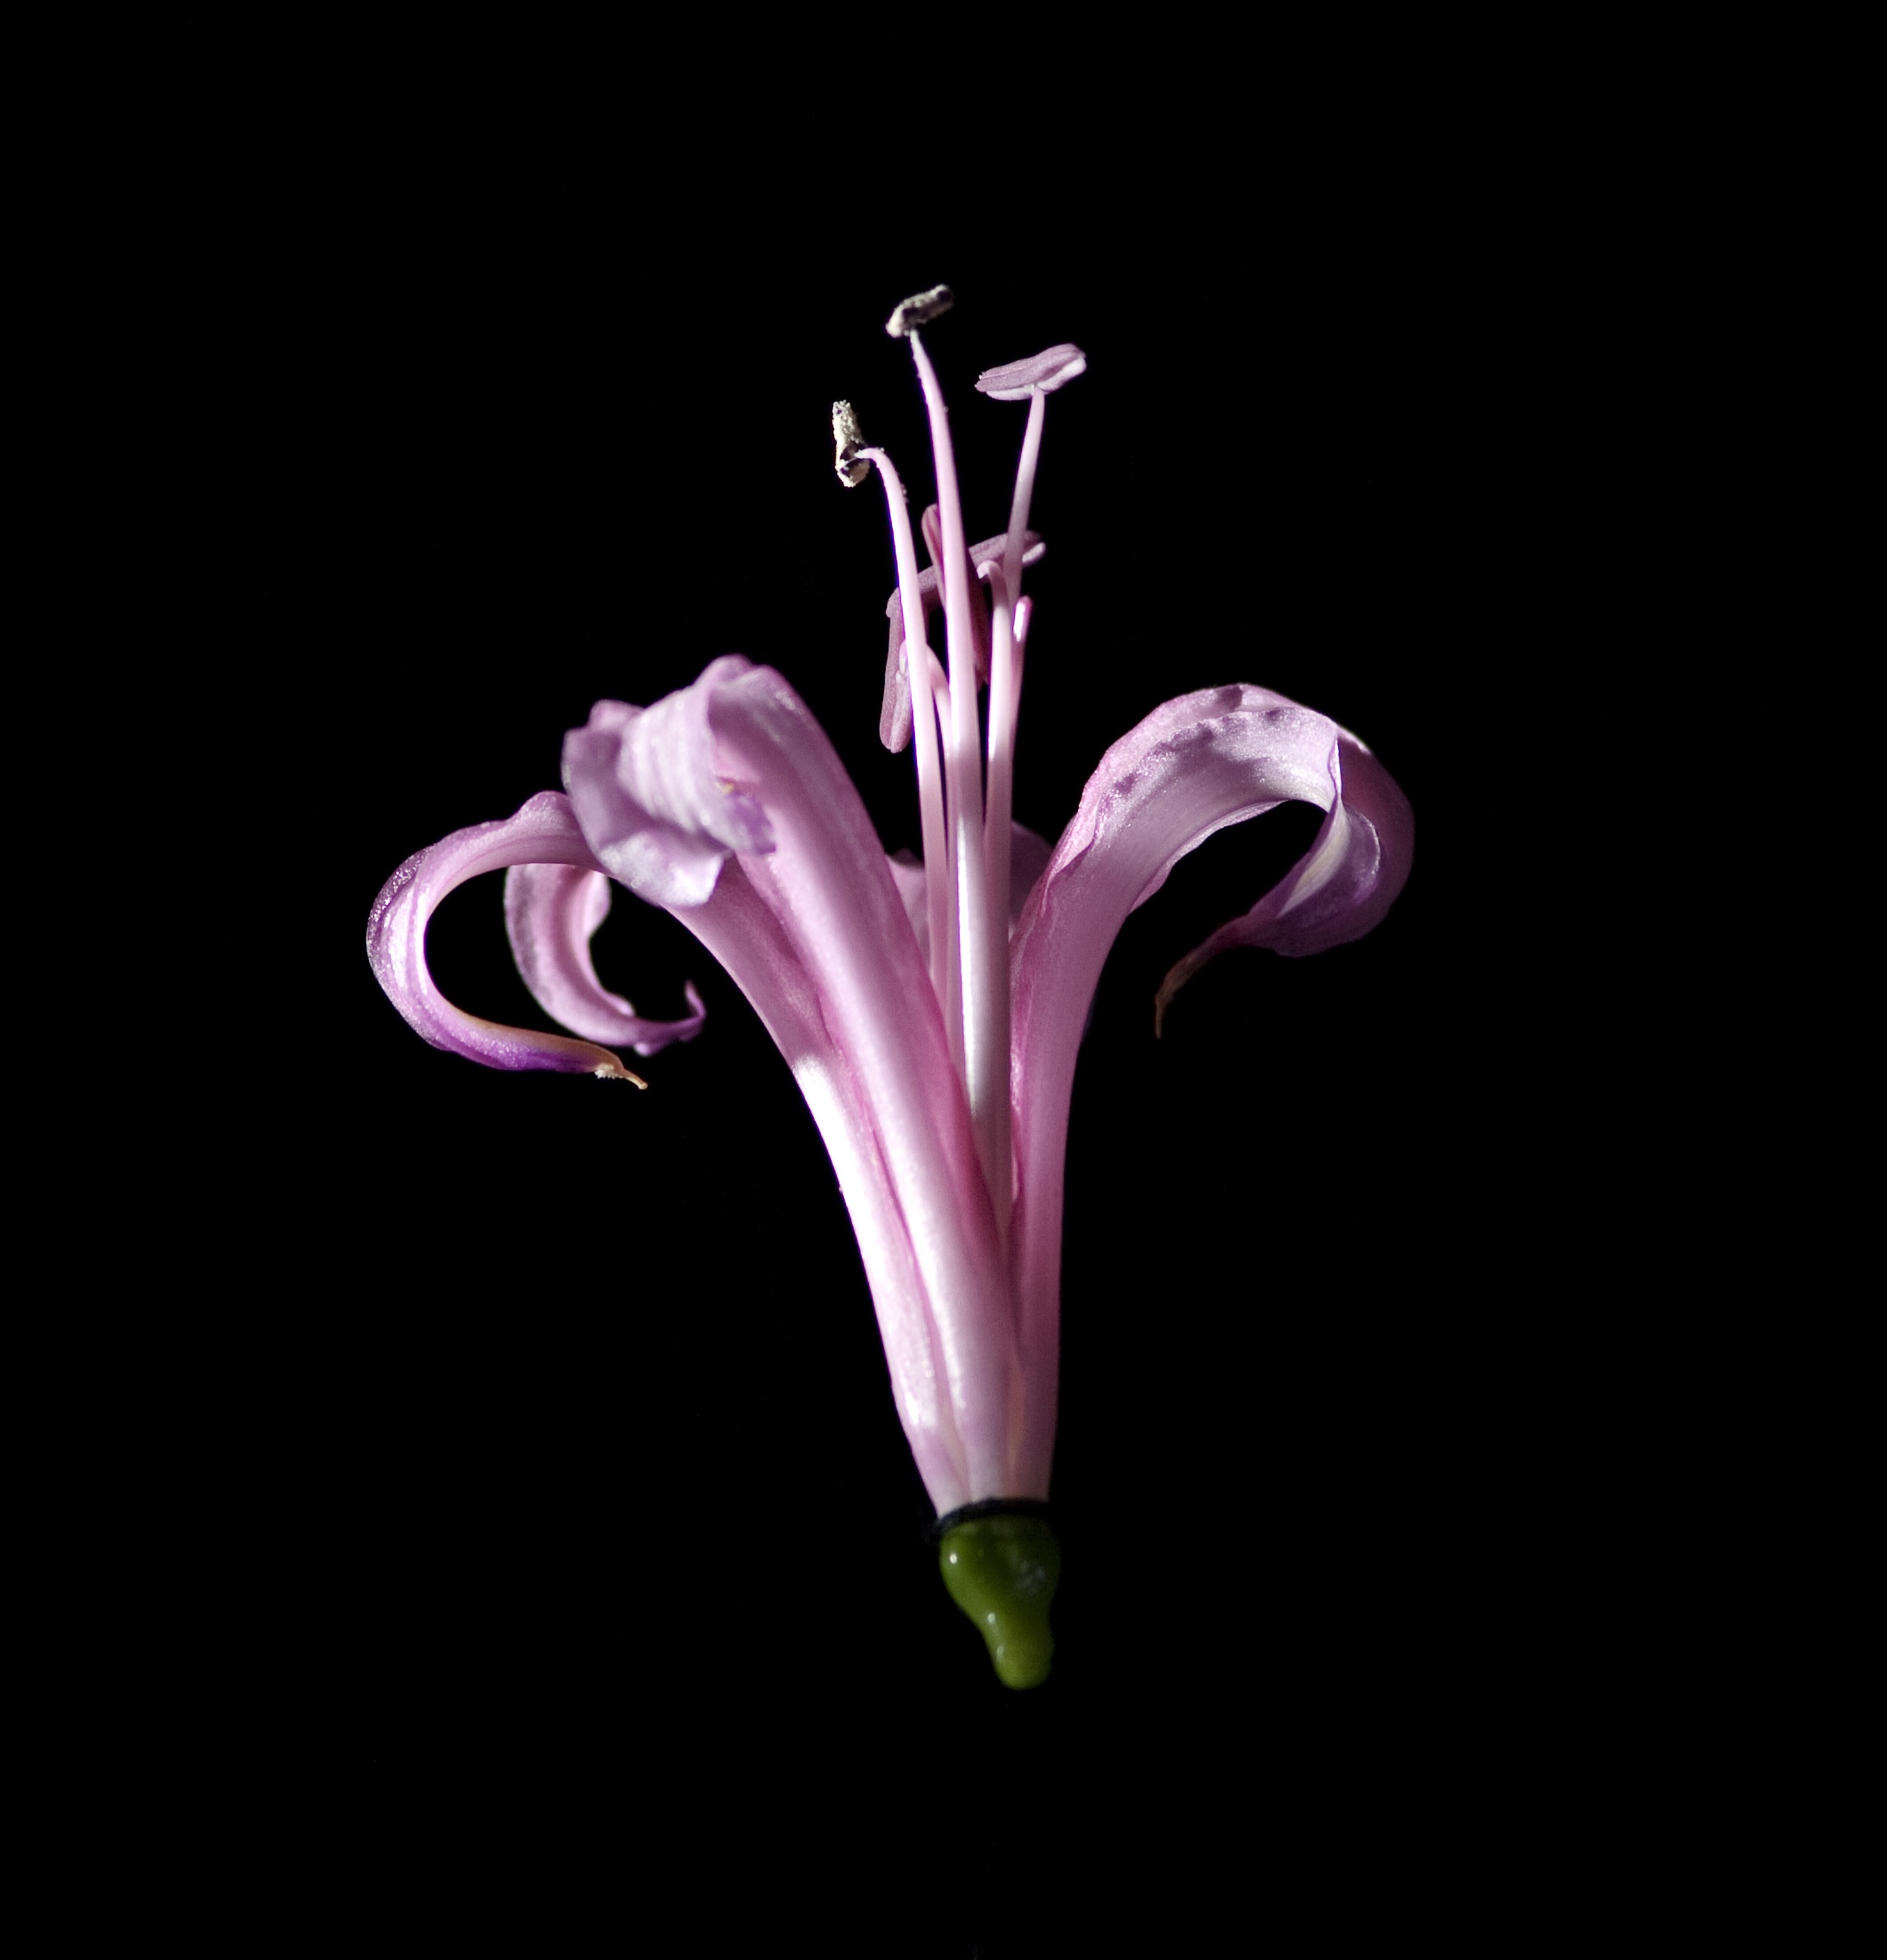 Nerine Lily / Unidentified Species